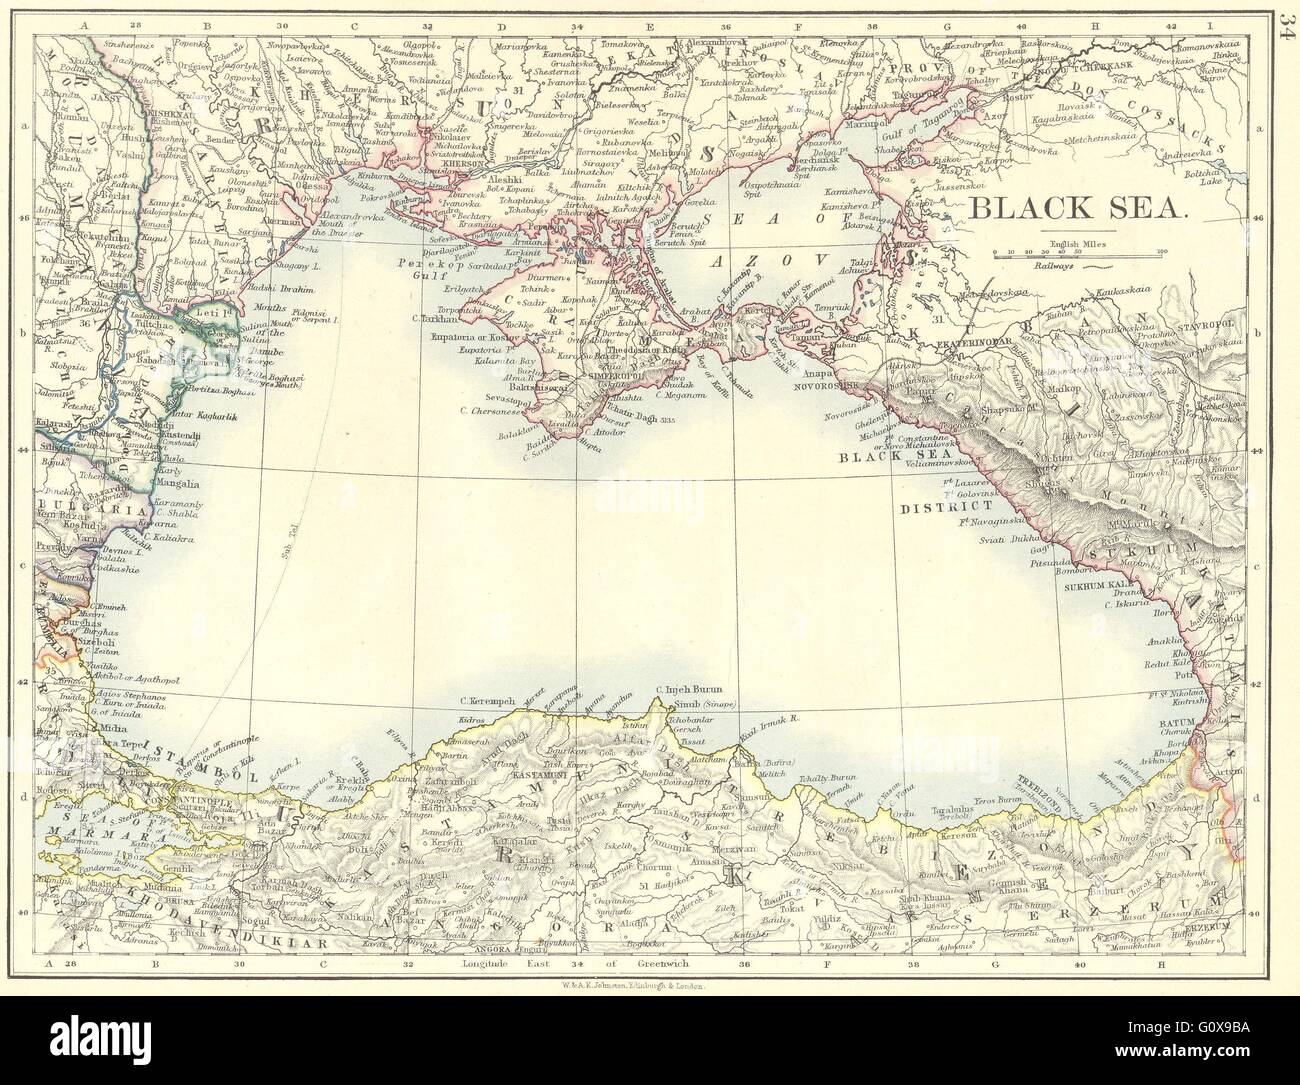 EUROPE: Black Sea, 1897 antique map Stock Photo